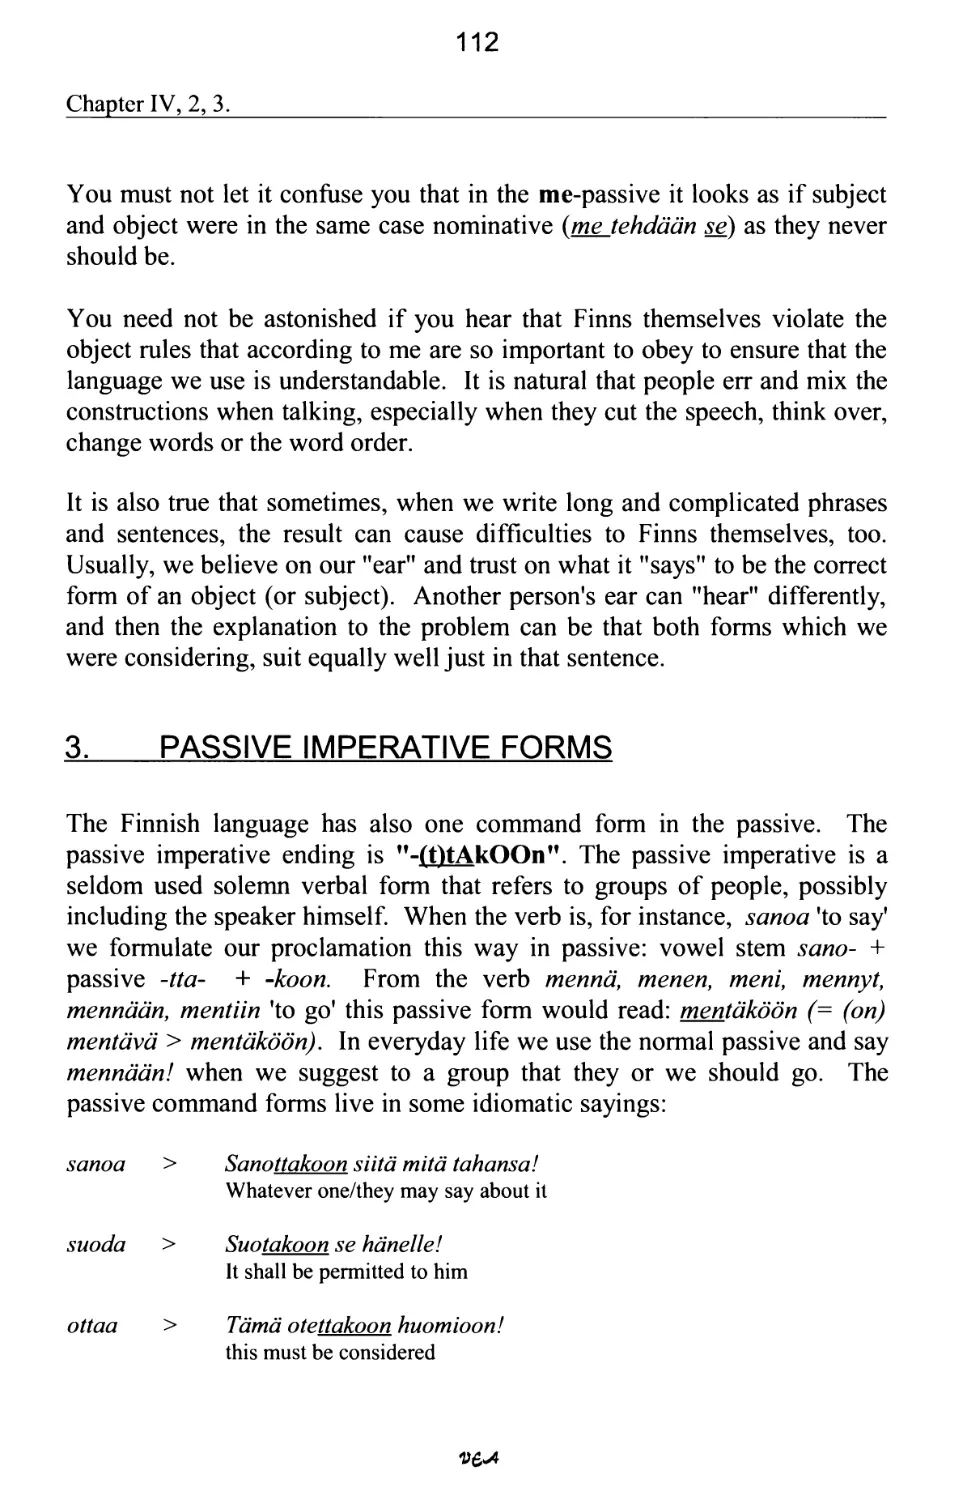 3. PASSIVE IMPERATIVE FORMS